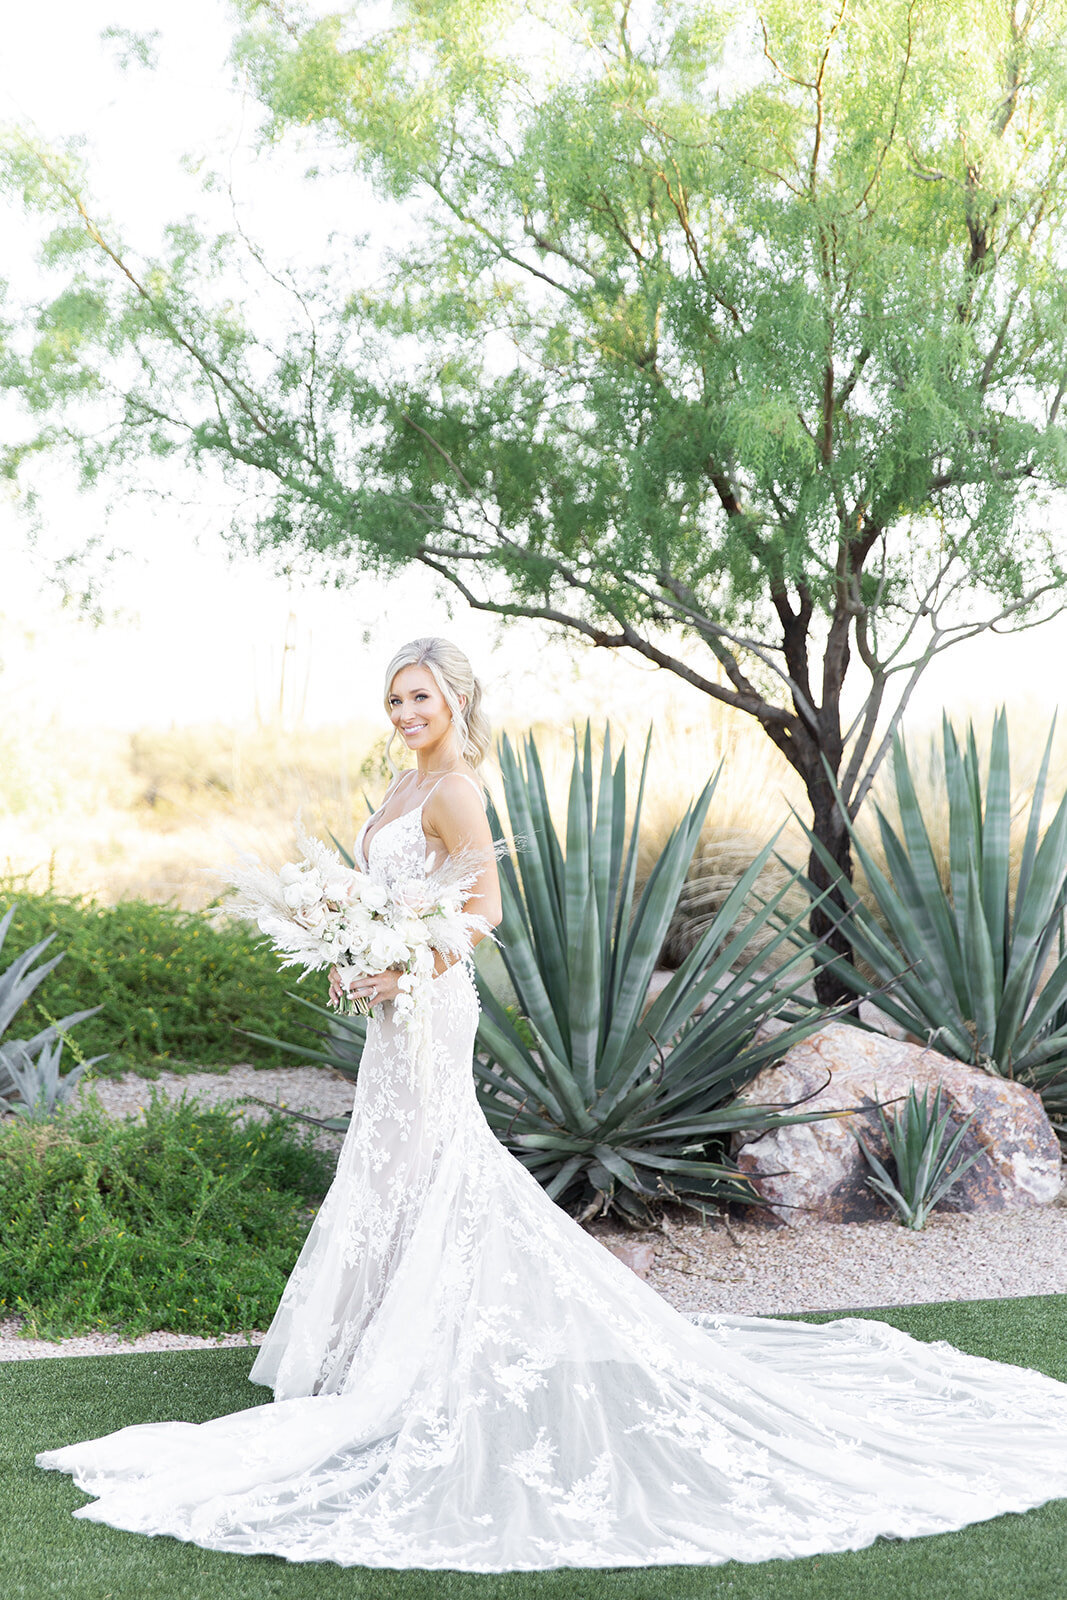 Karlie Colleen Photography - Ashley & Grant Wedding - The Paseo - Phoenix Arizona-702